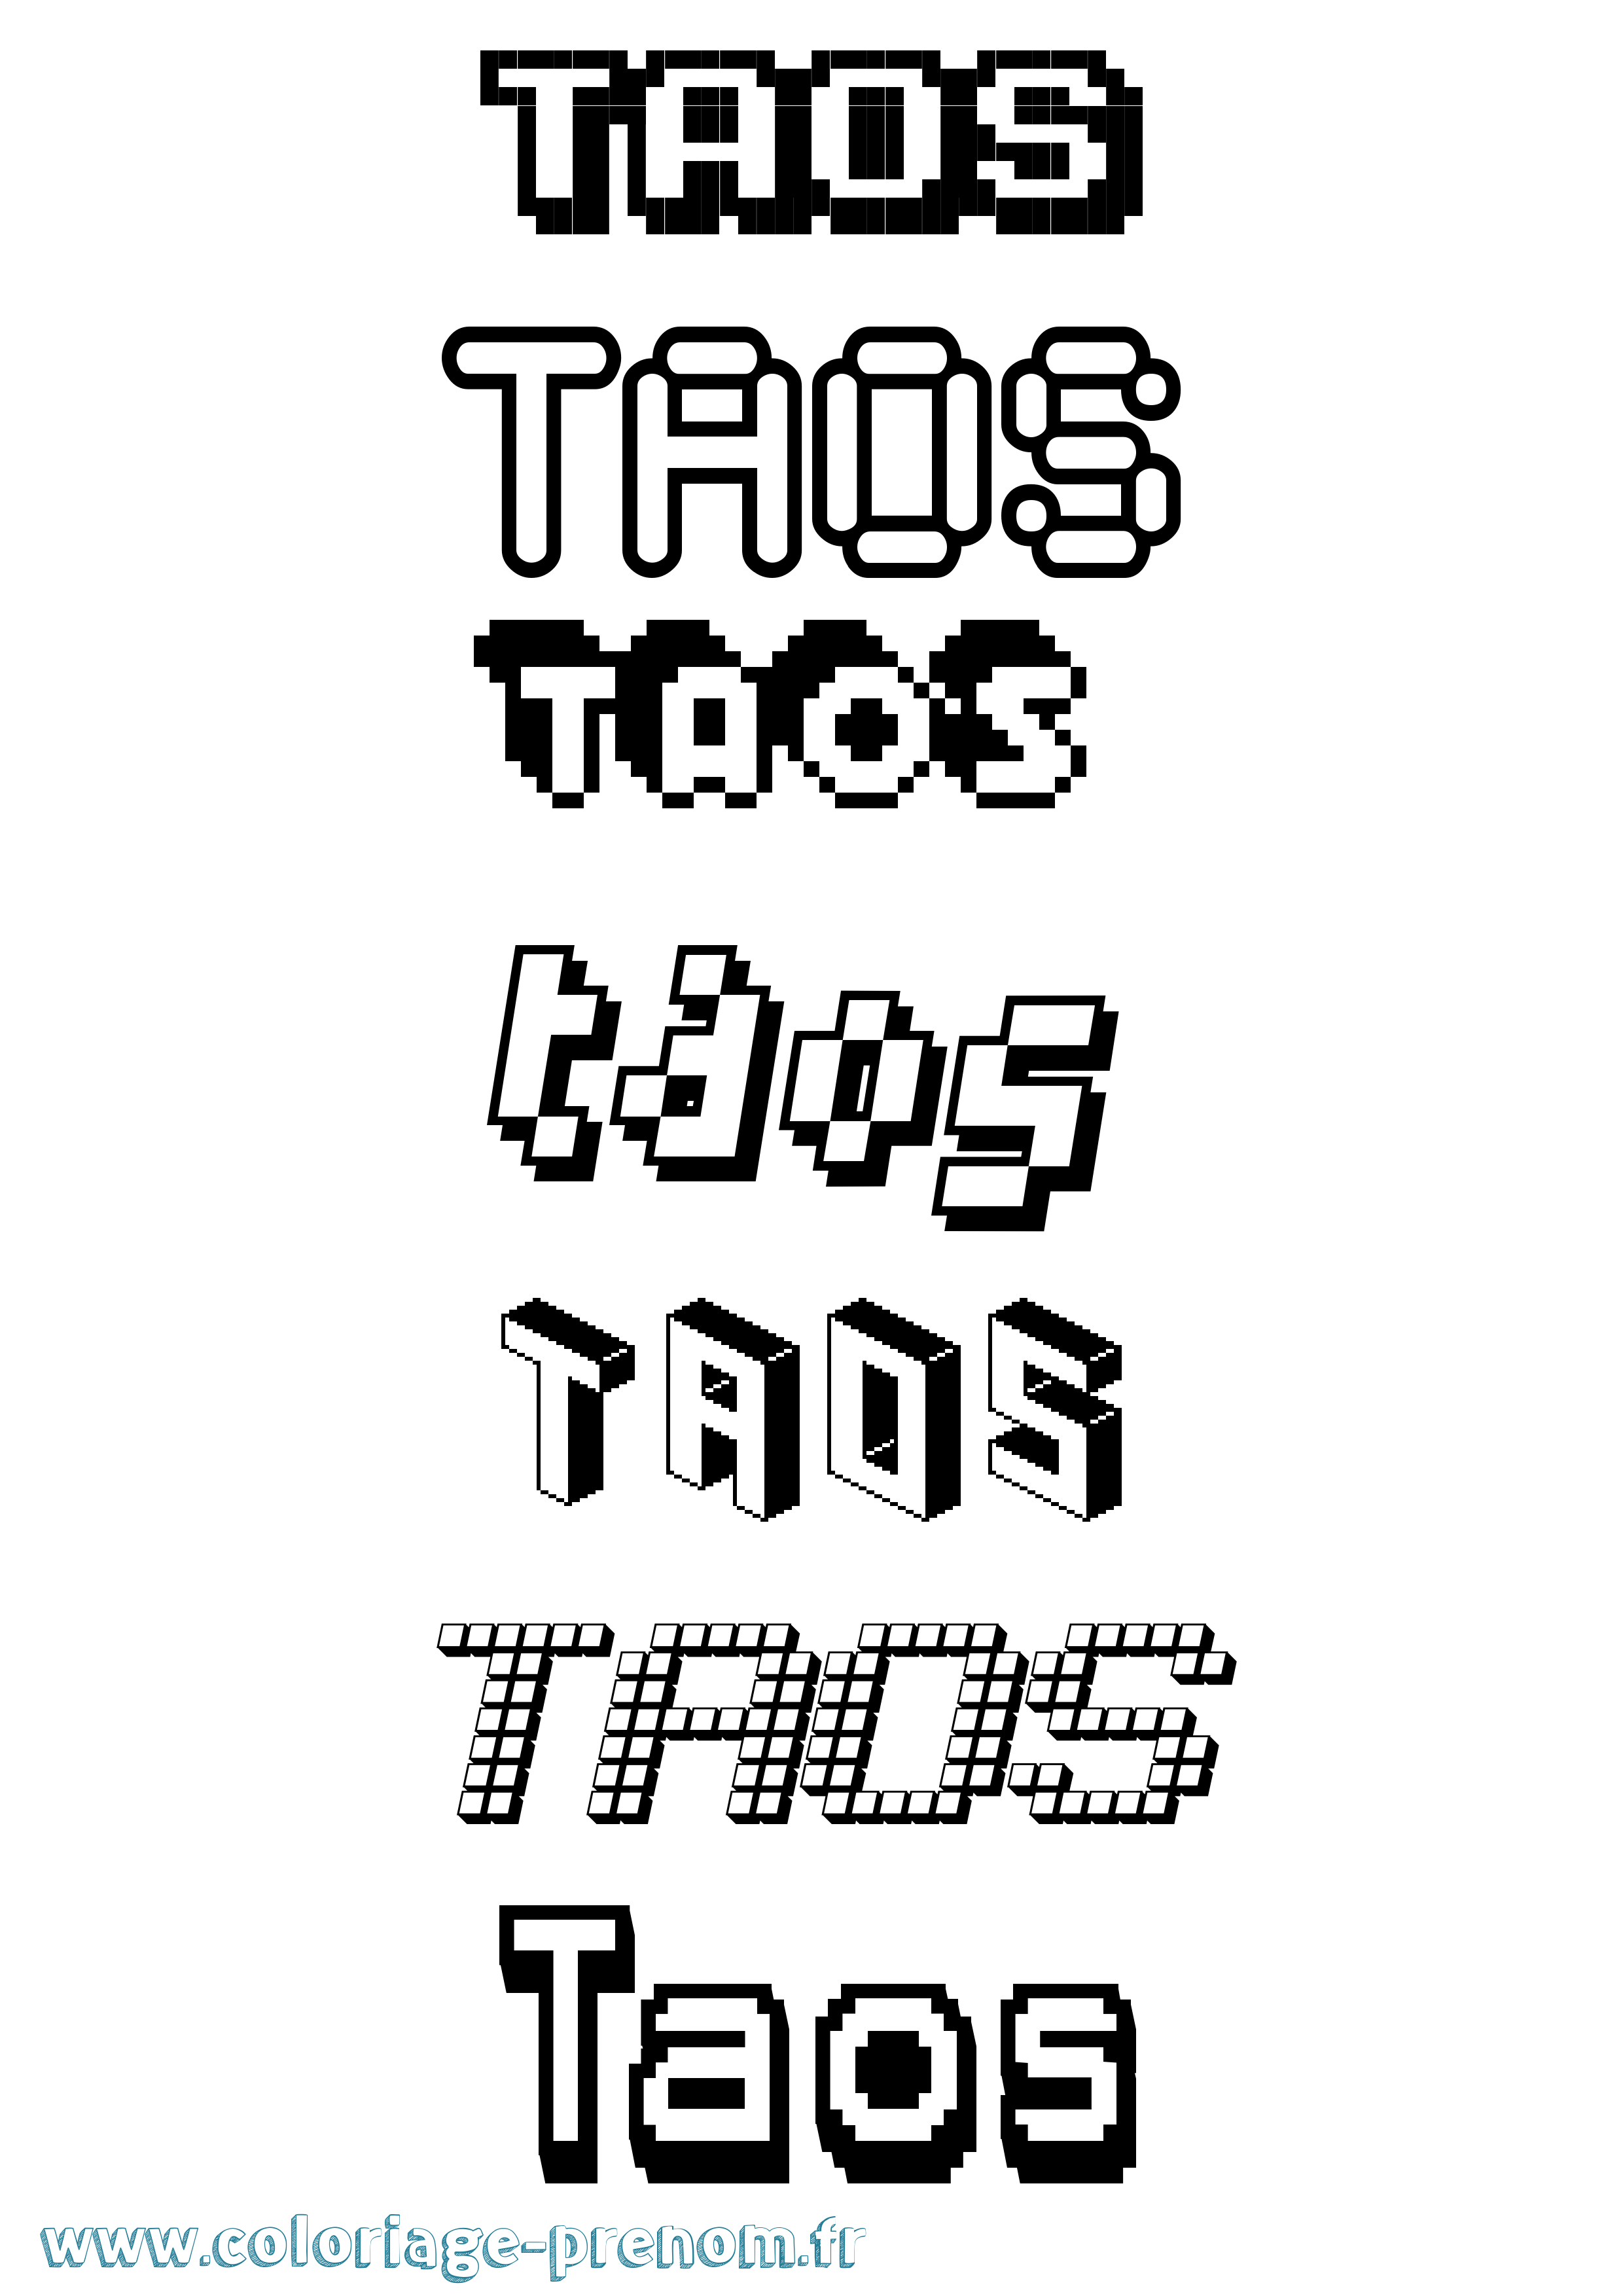 Coloriage prénom Taos Pixel